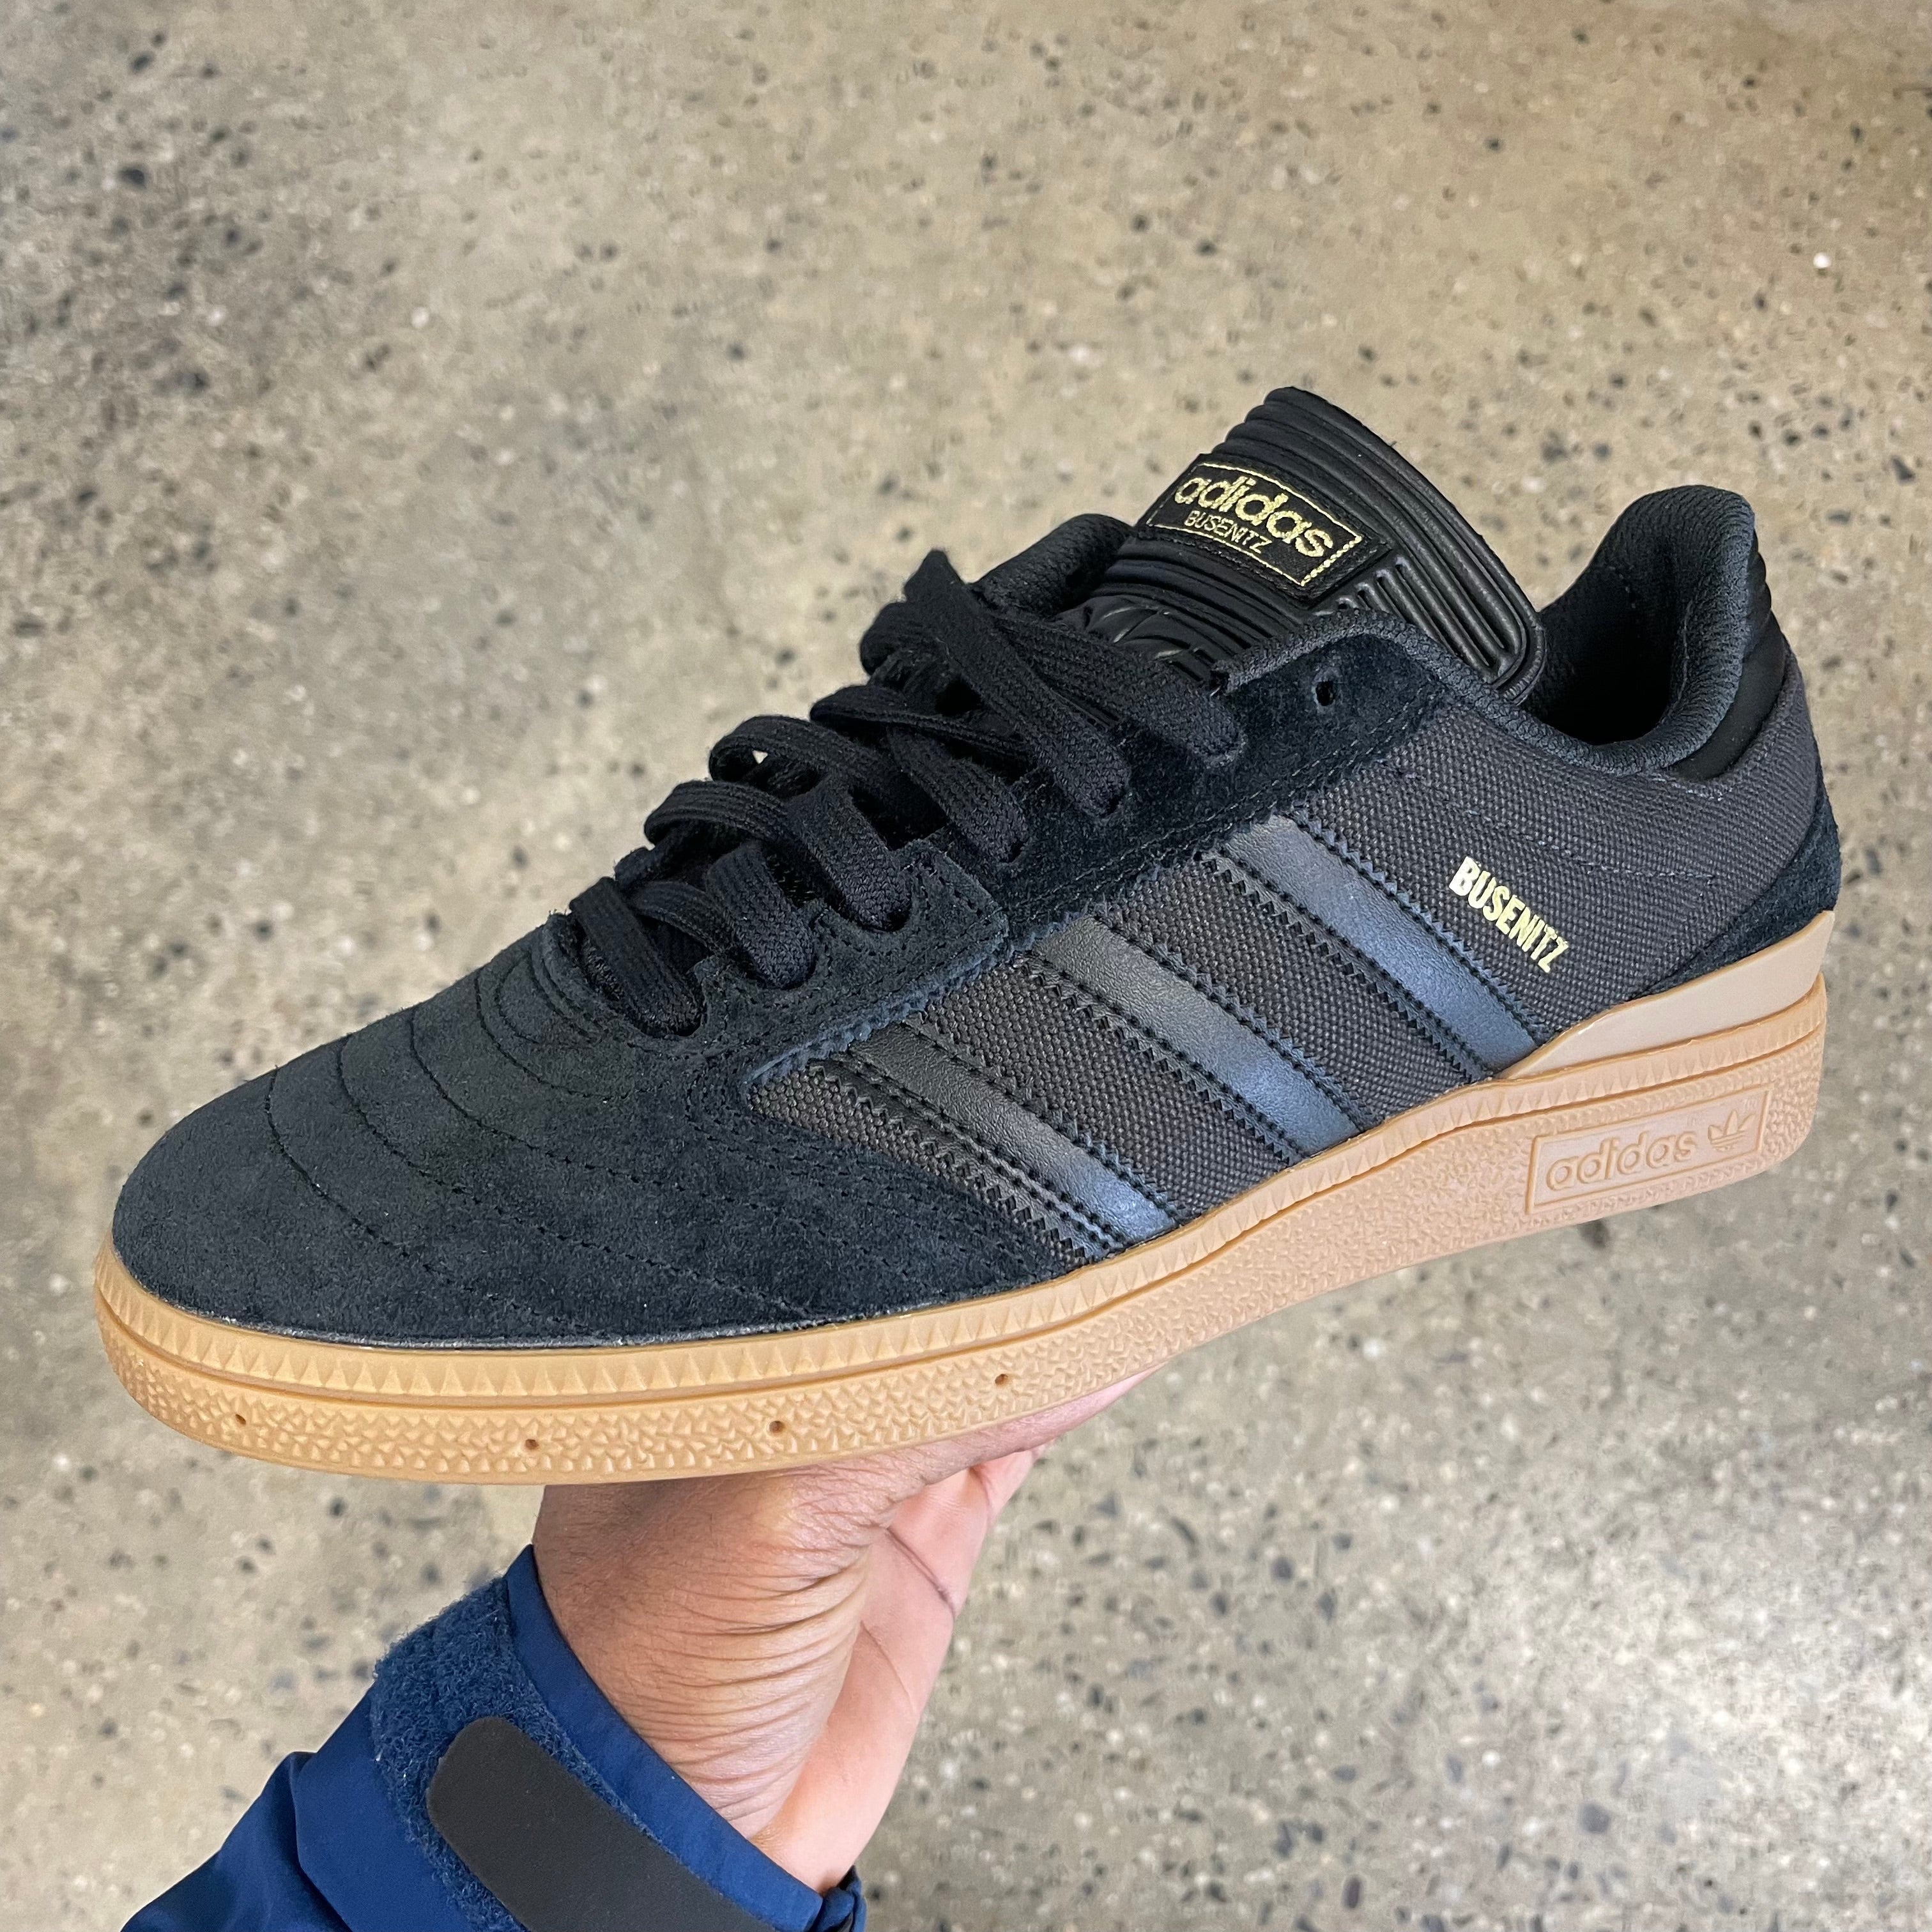 Adidas Black/Carbon/Gum - Skateboard Shop